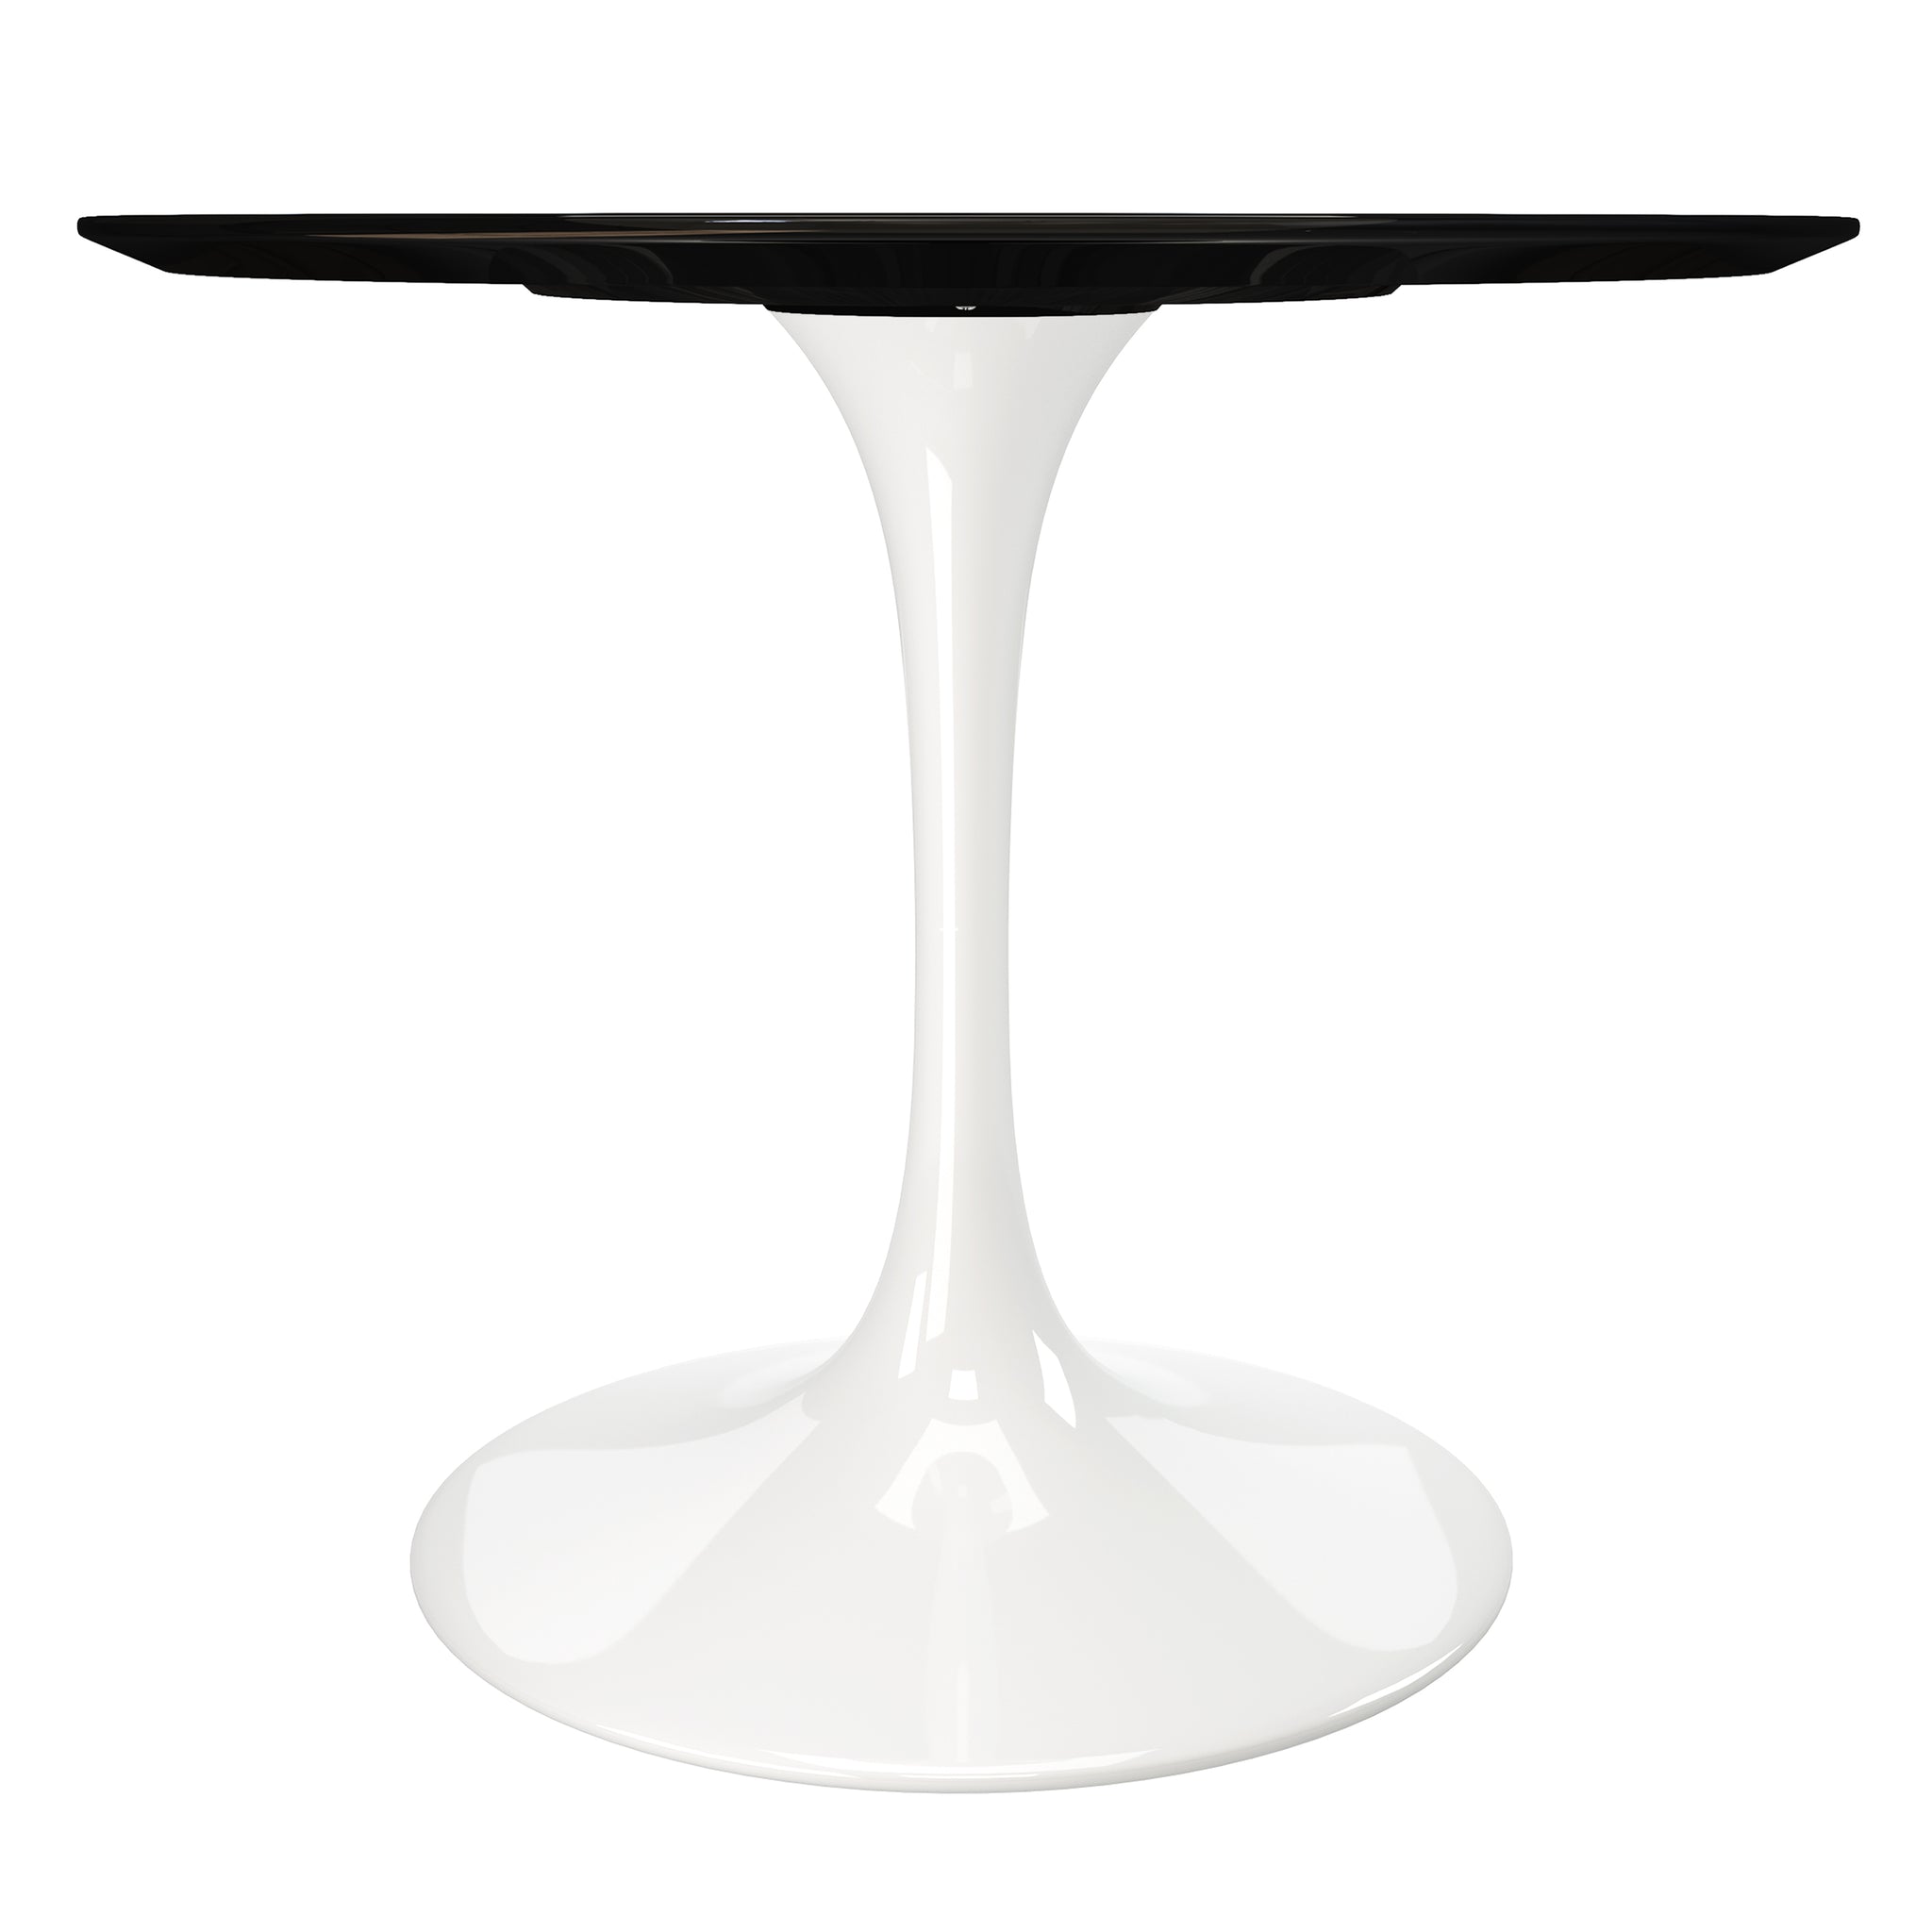 Tulip Fiberglass Dining Table, Round White Base